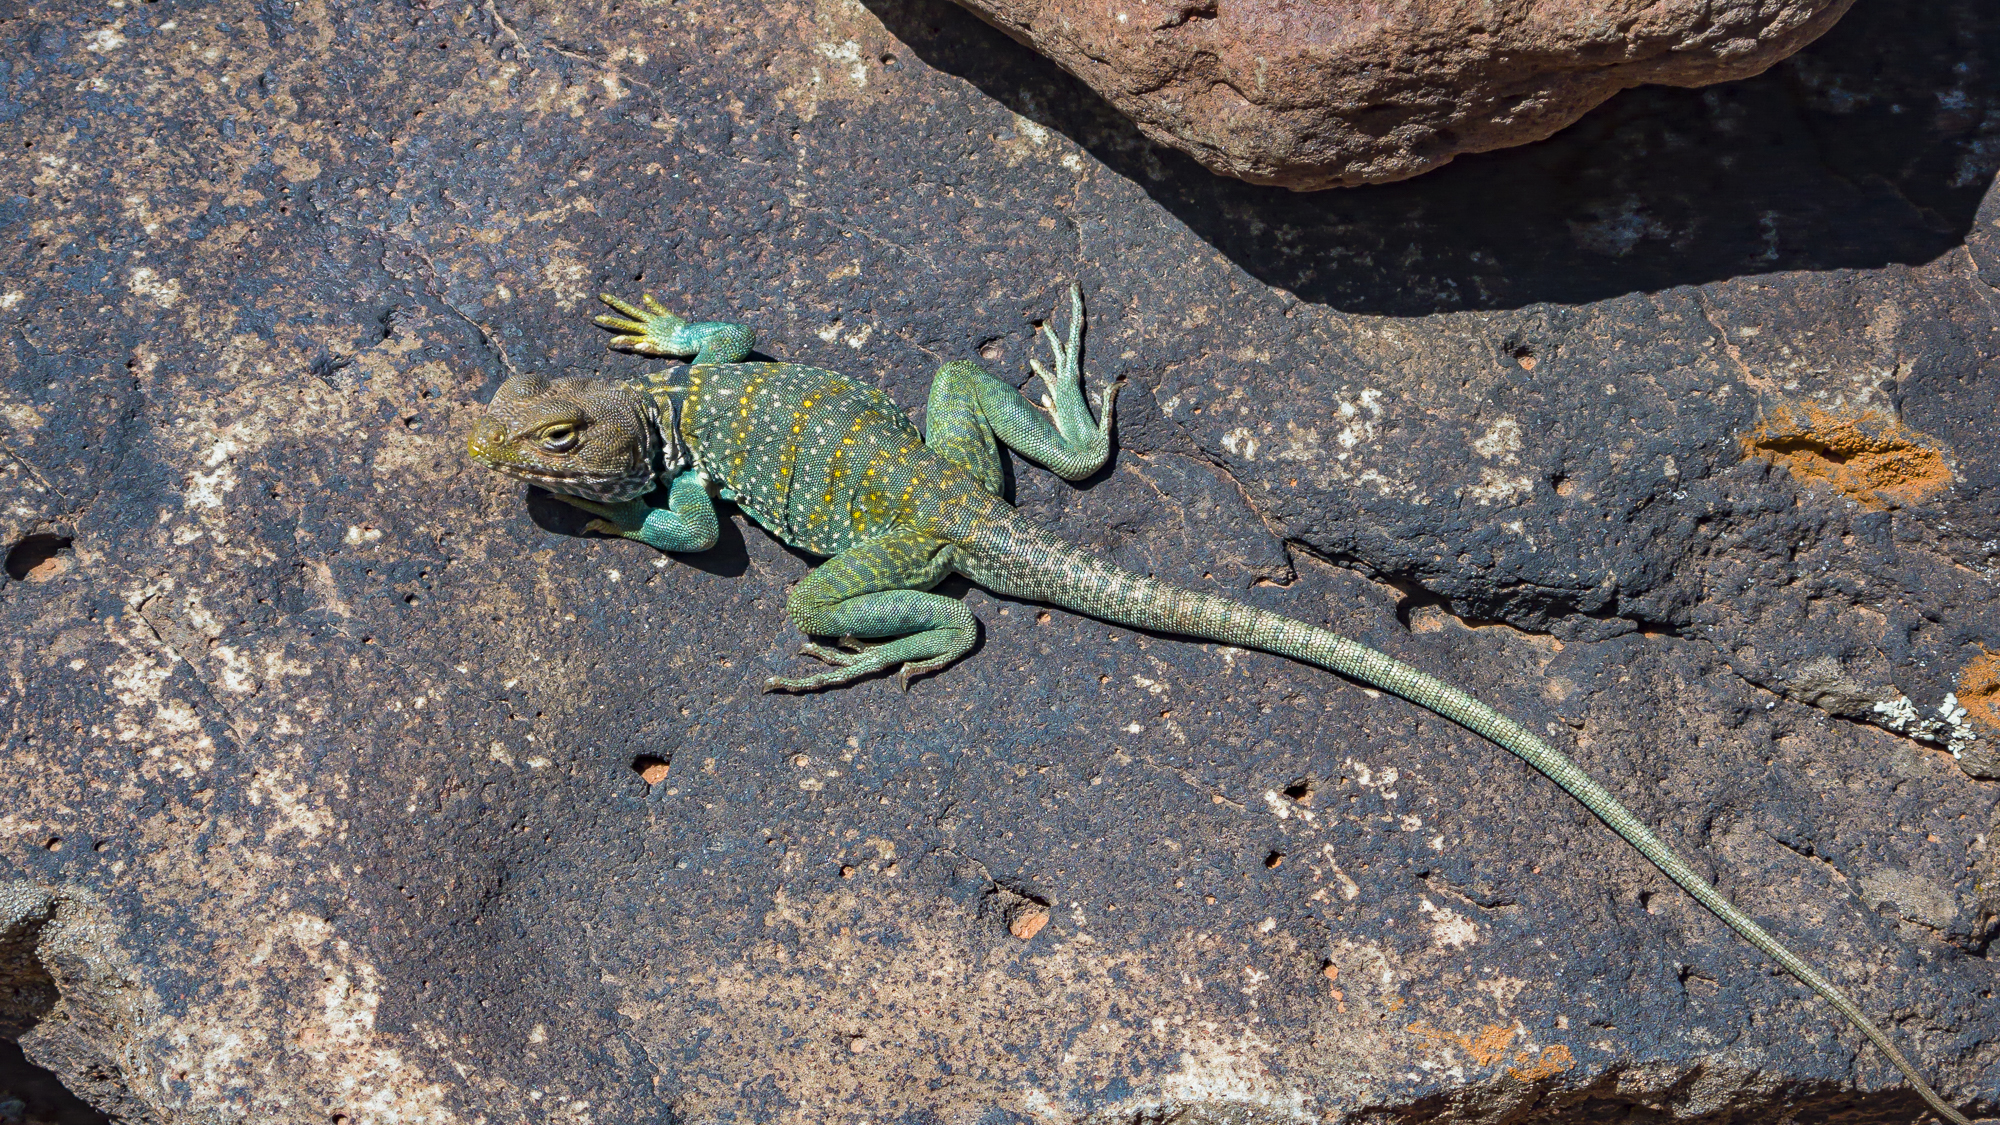 Collared Lizard at Cowpies trailhead in Sedona, AZ.